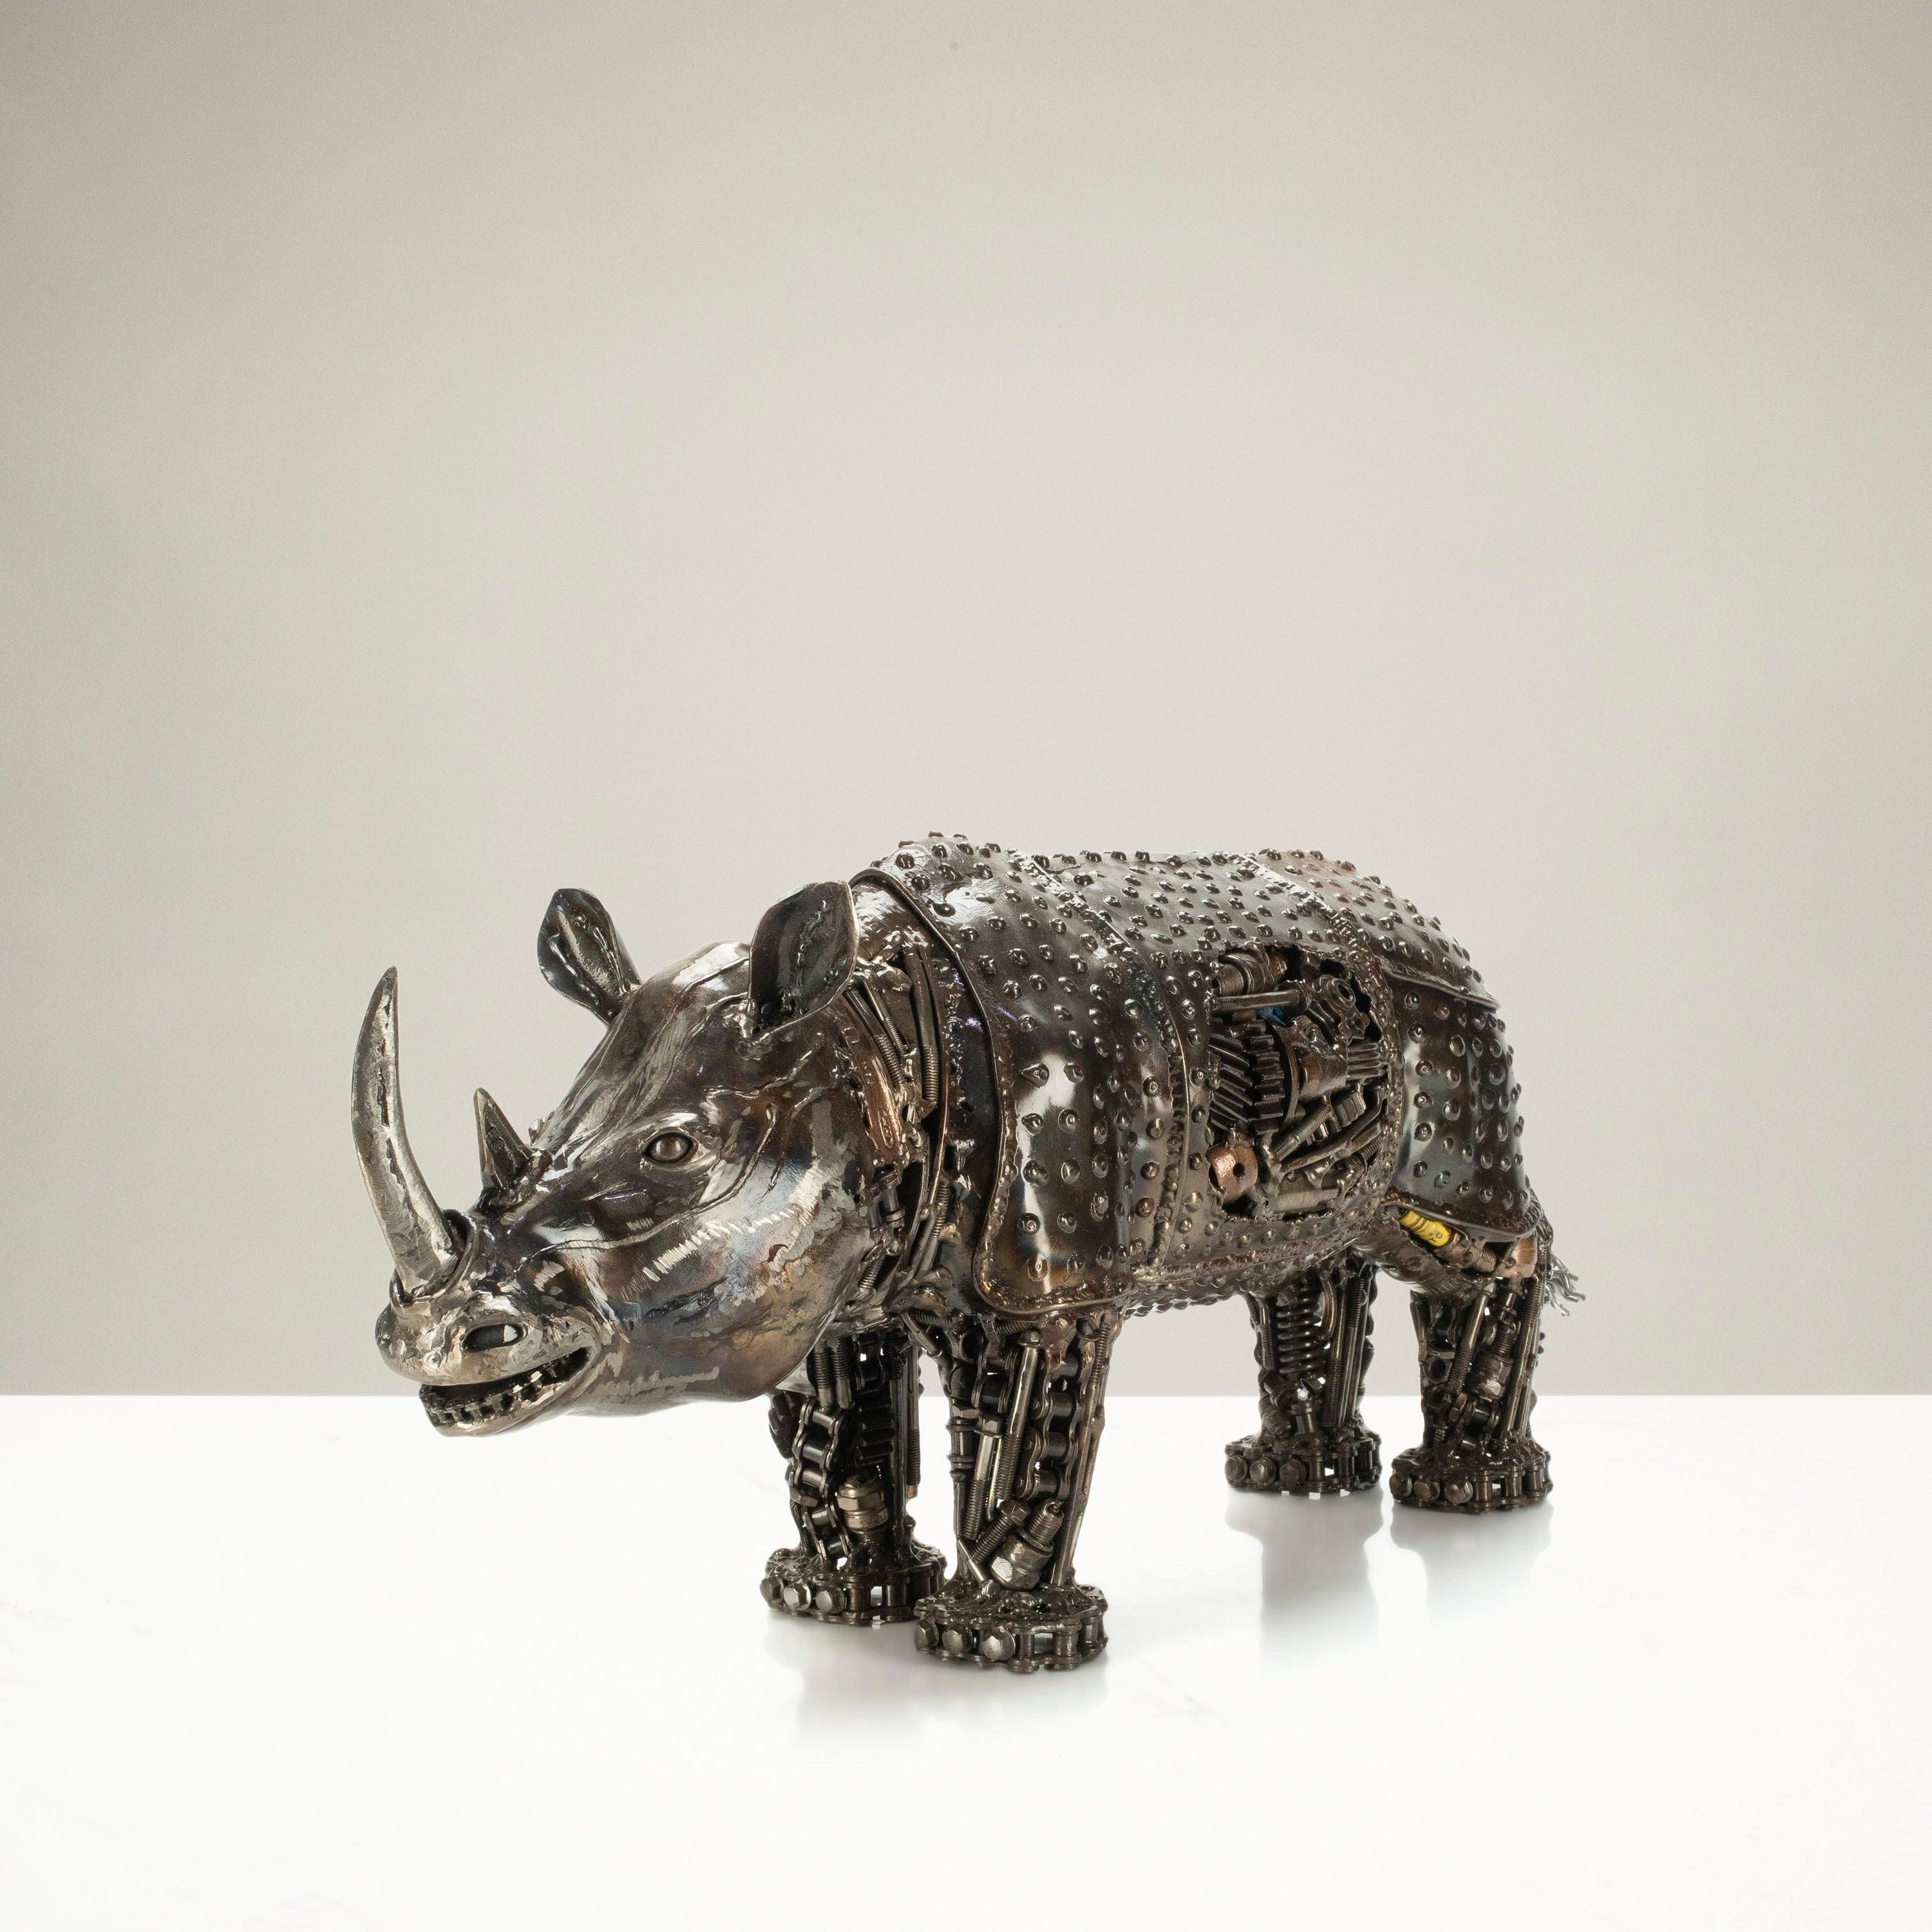 KALIFANO Recycled Metal Art Rhino Inspired Recycled Metal Art Sculpture RMS-4300RH-PK